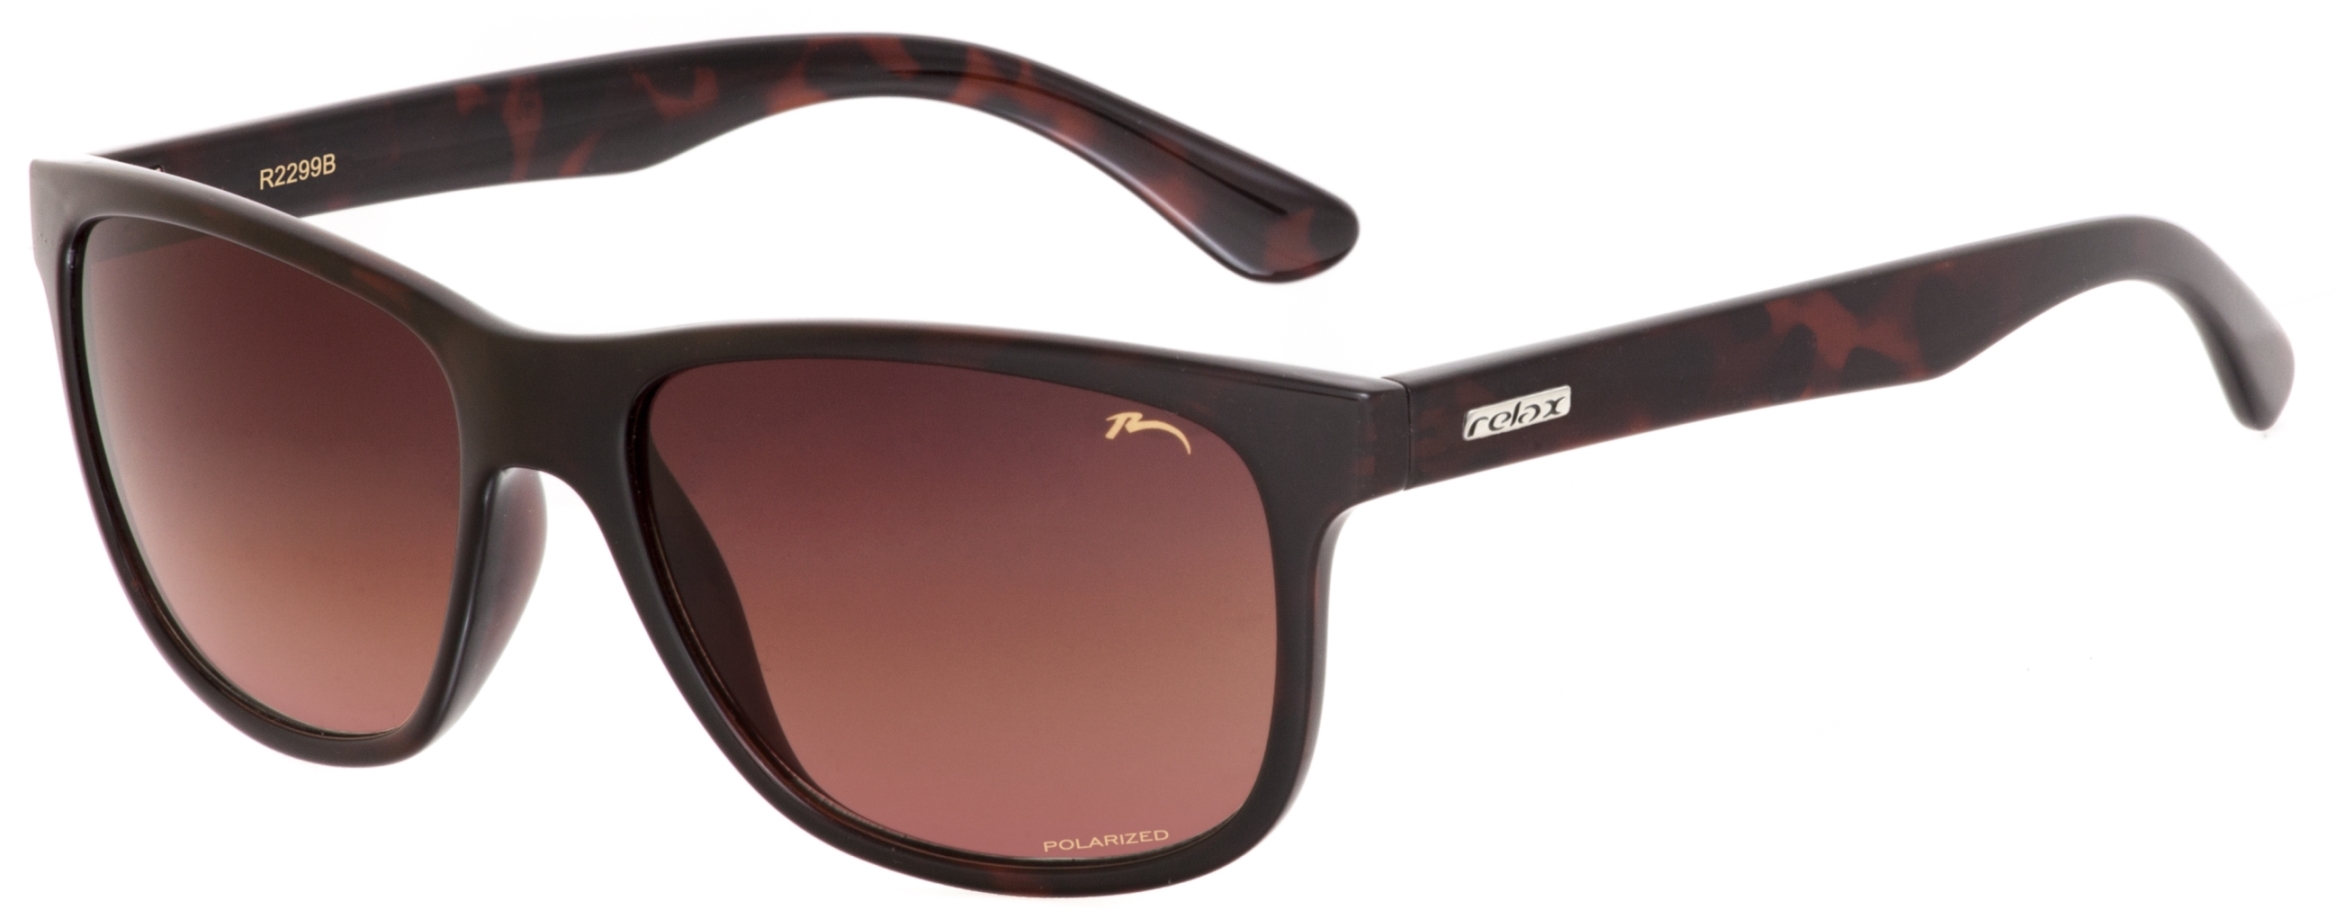 Polarized sunglasses  Relax Herds R2299B standard